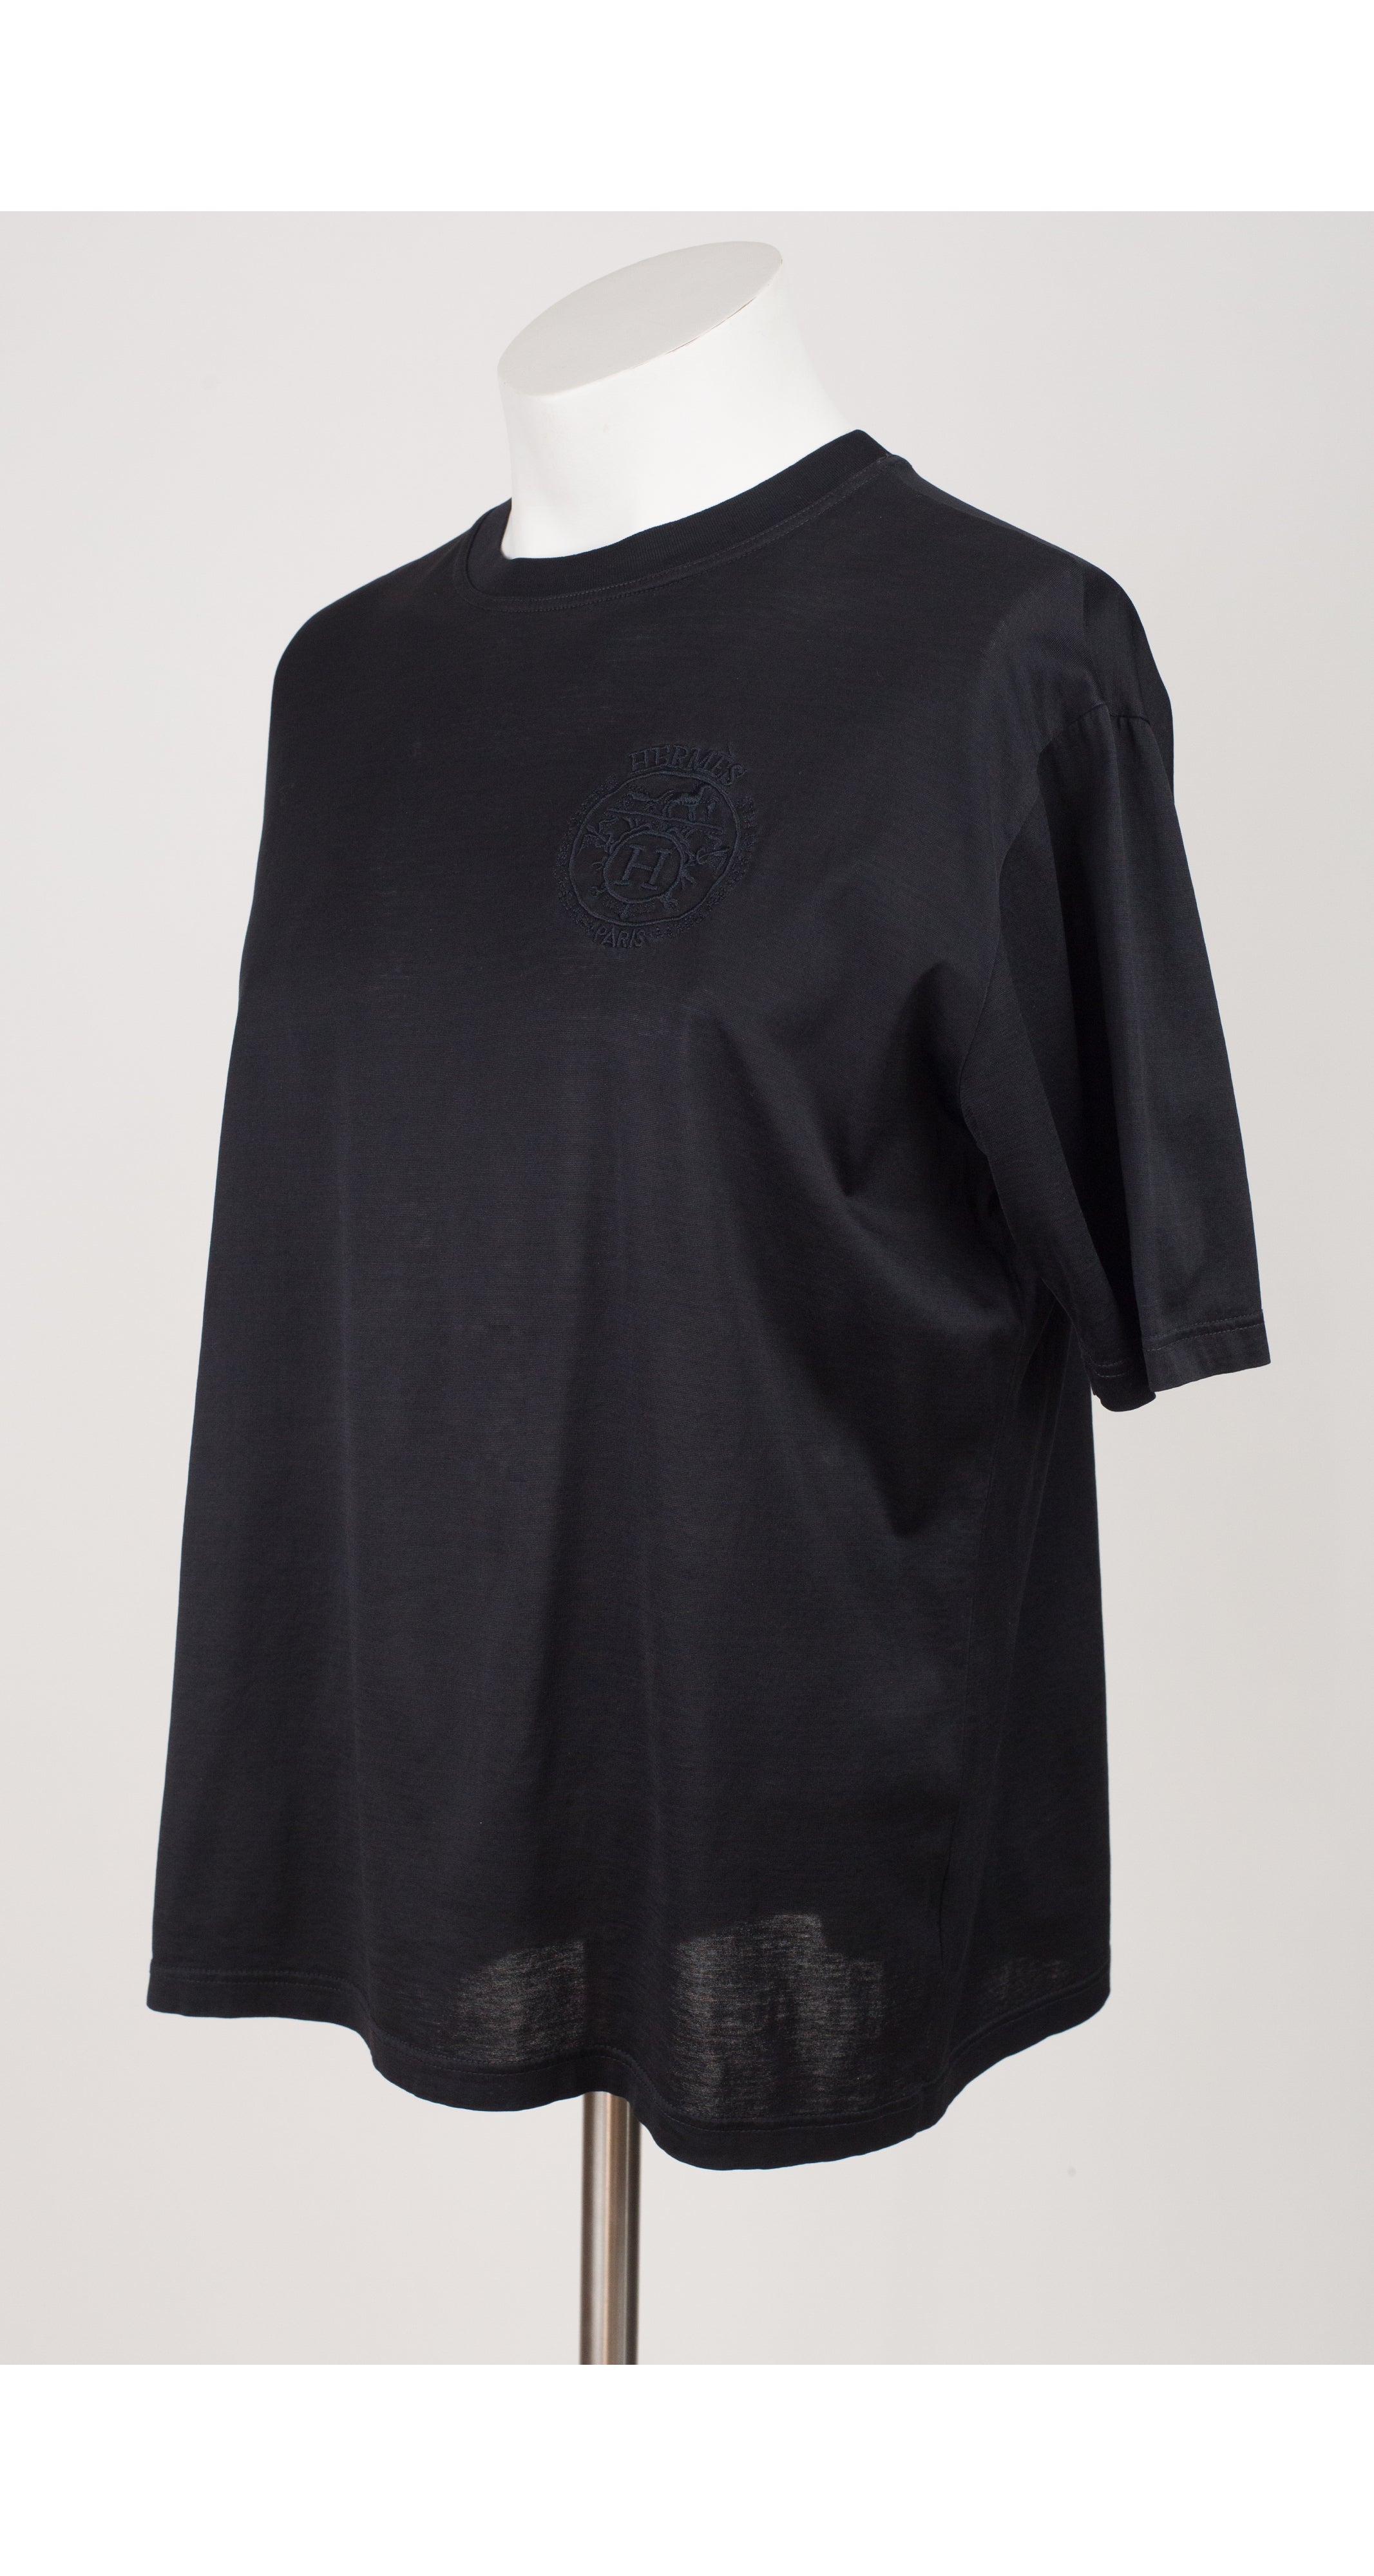 1990s Men's Logo Emblem Black Cotton Jersey T-Shirt